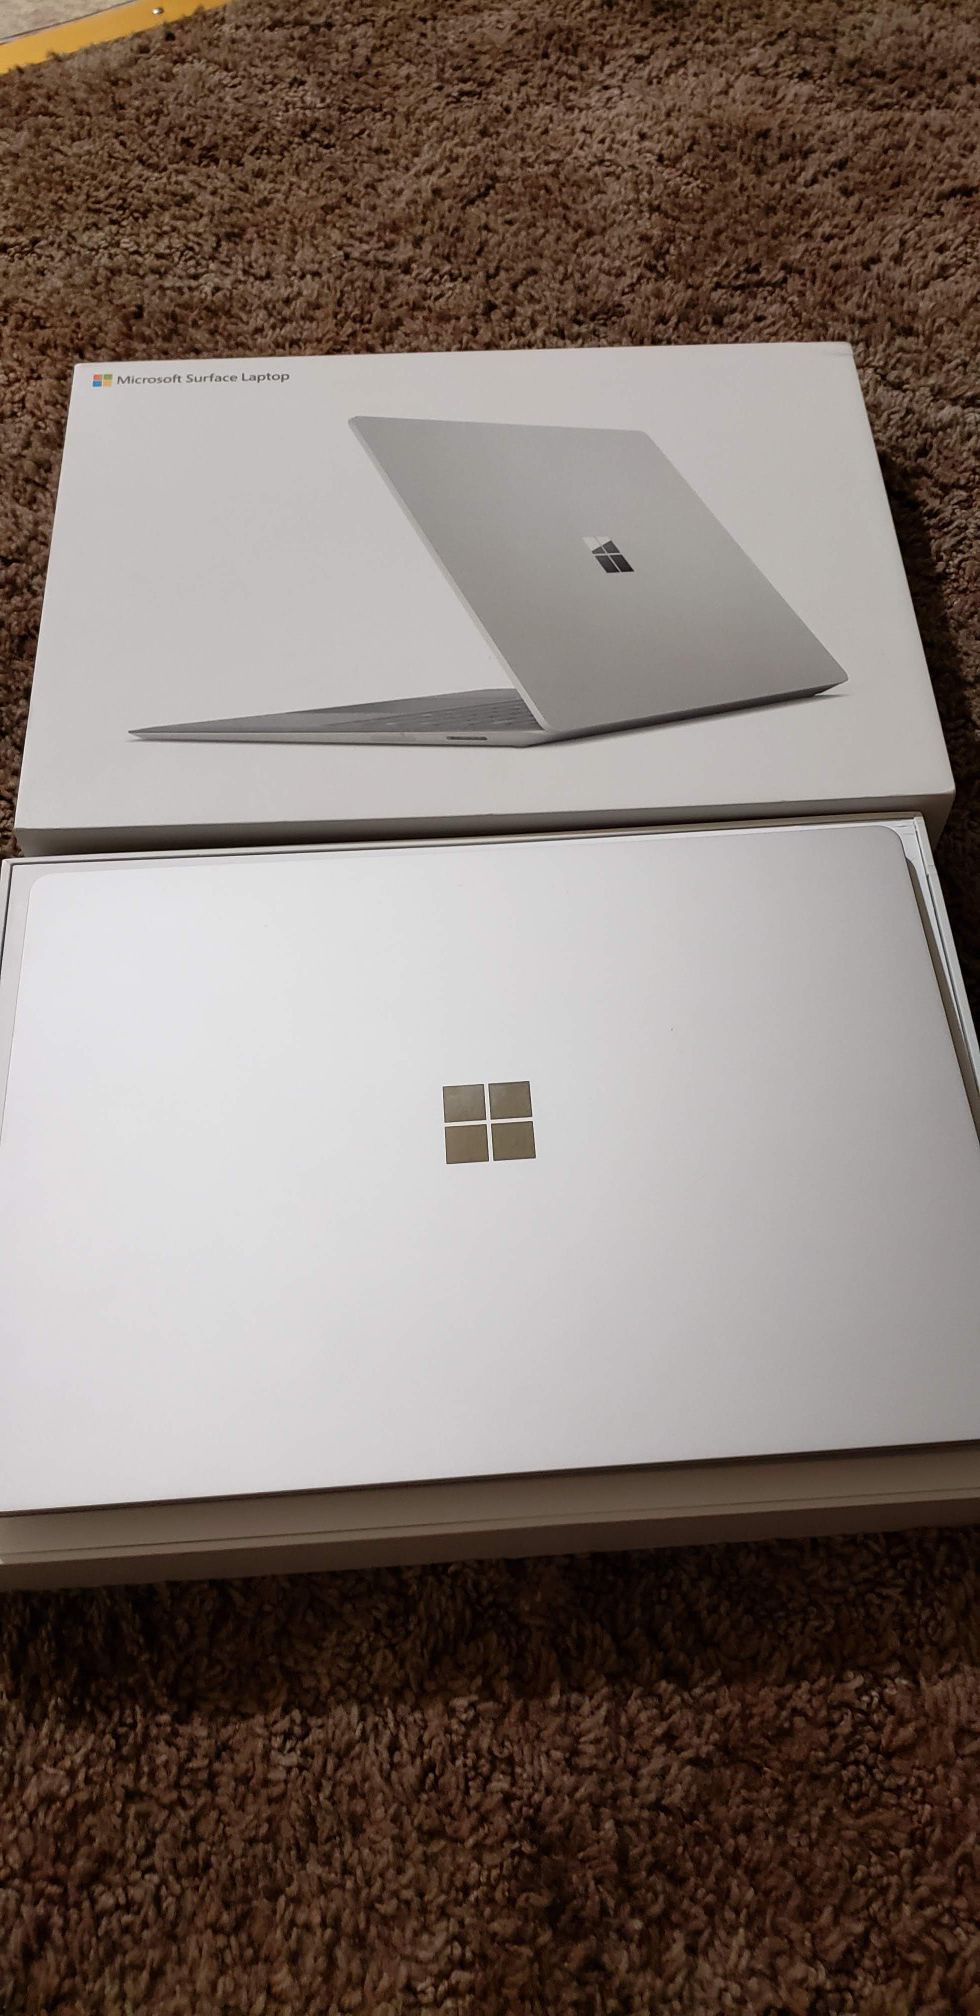 Microsoft Surface Laptop 2018 touchscreen